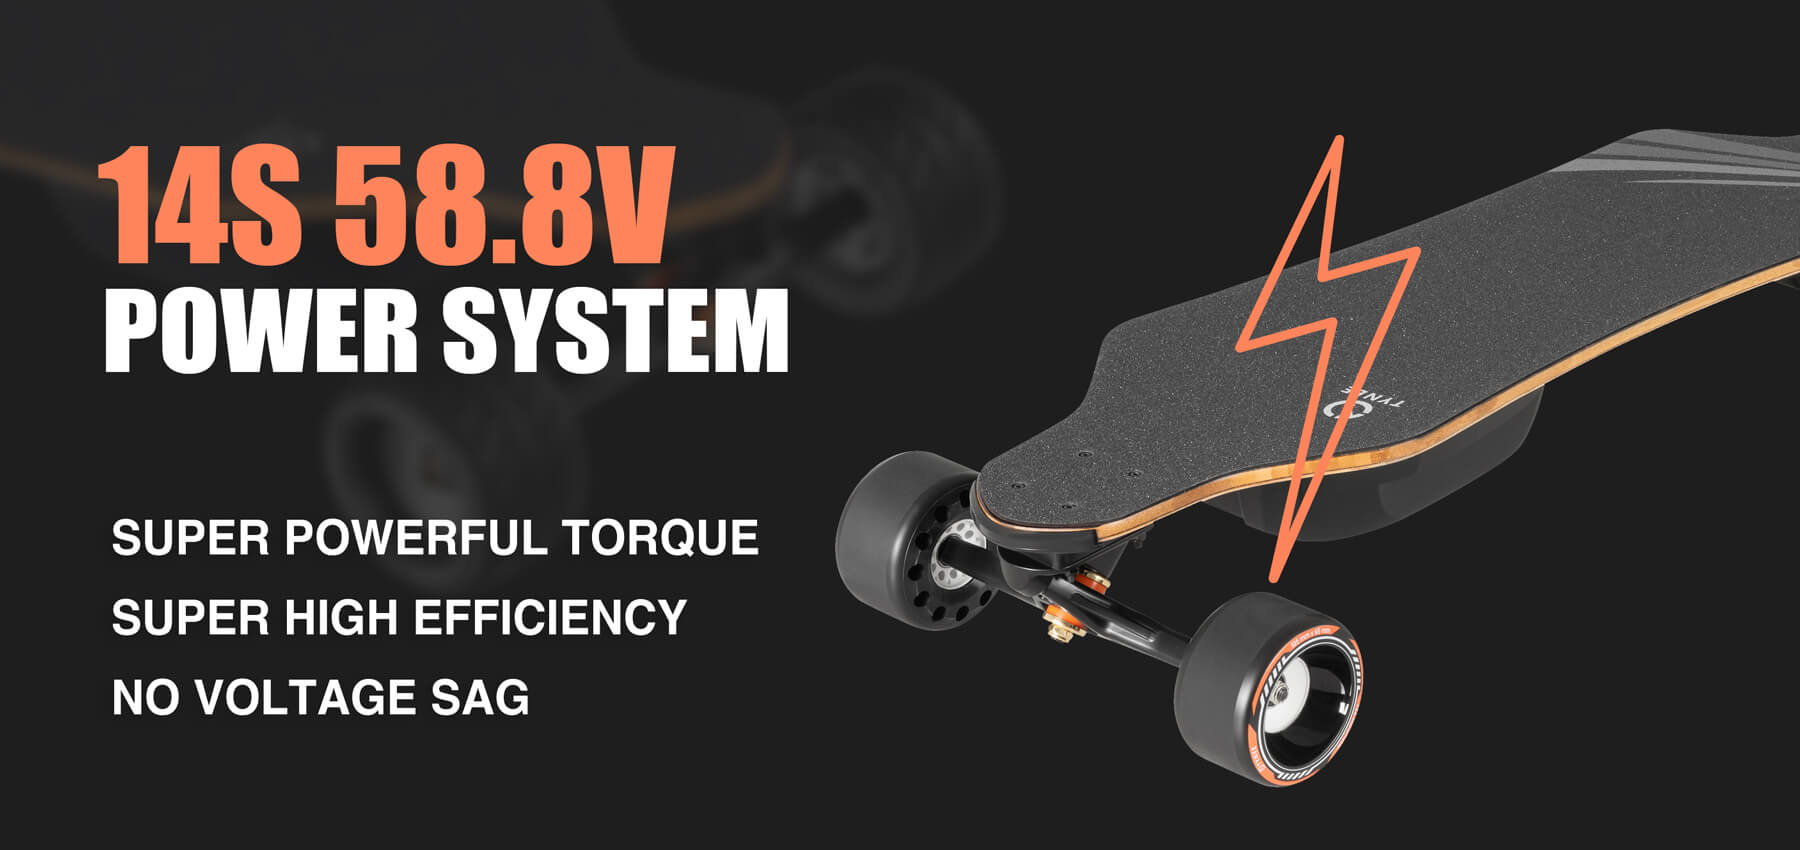 Tynee ultra x pro electric skateboard 14S power system